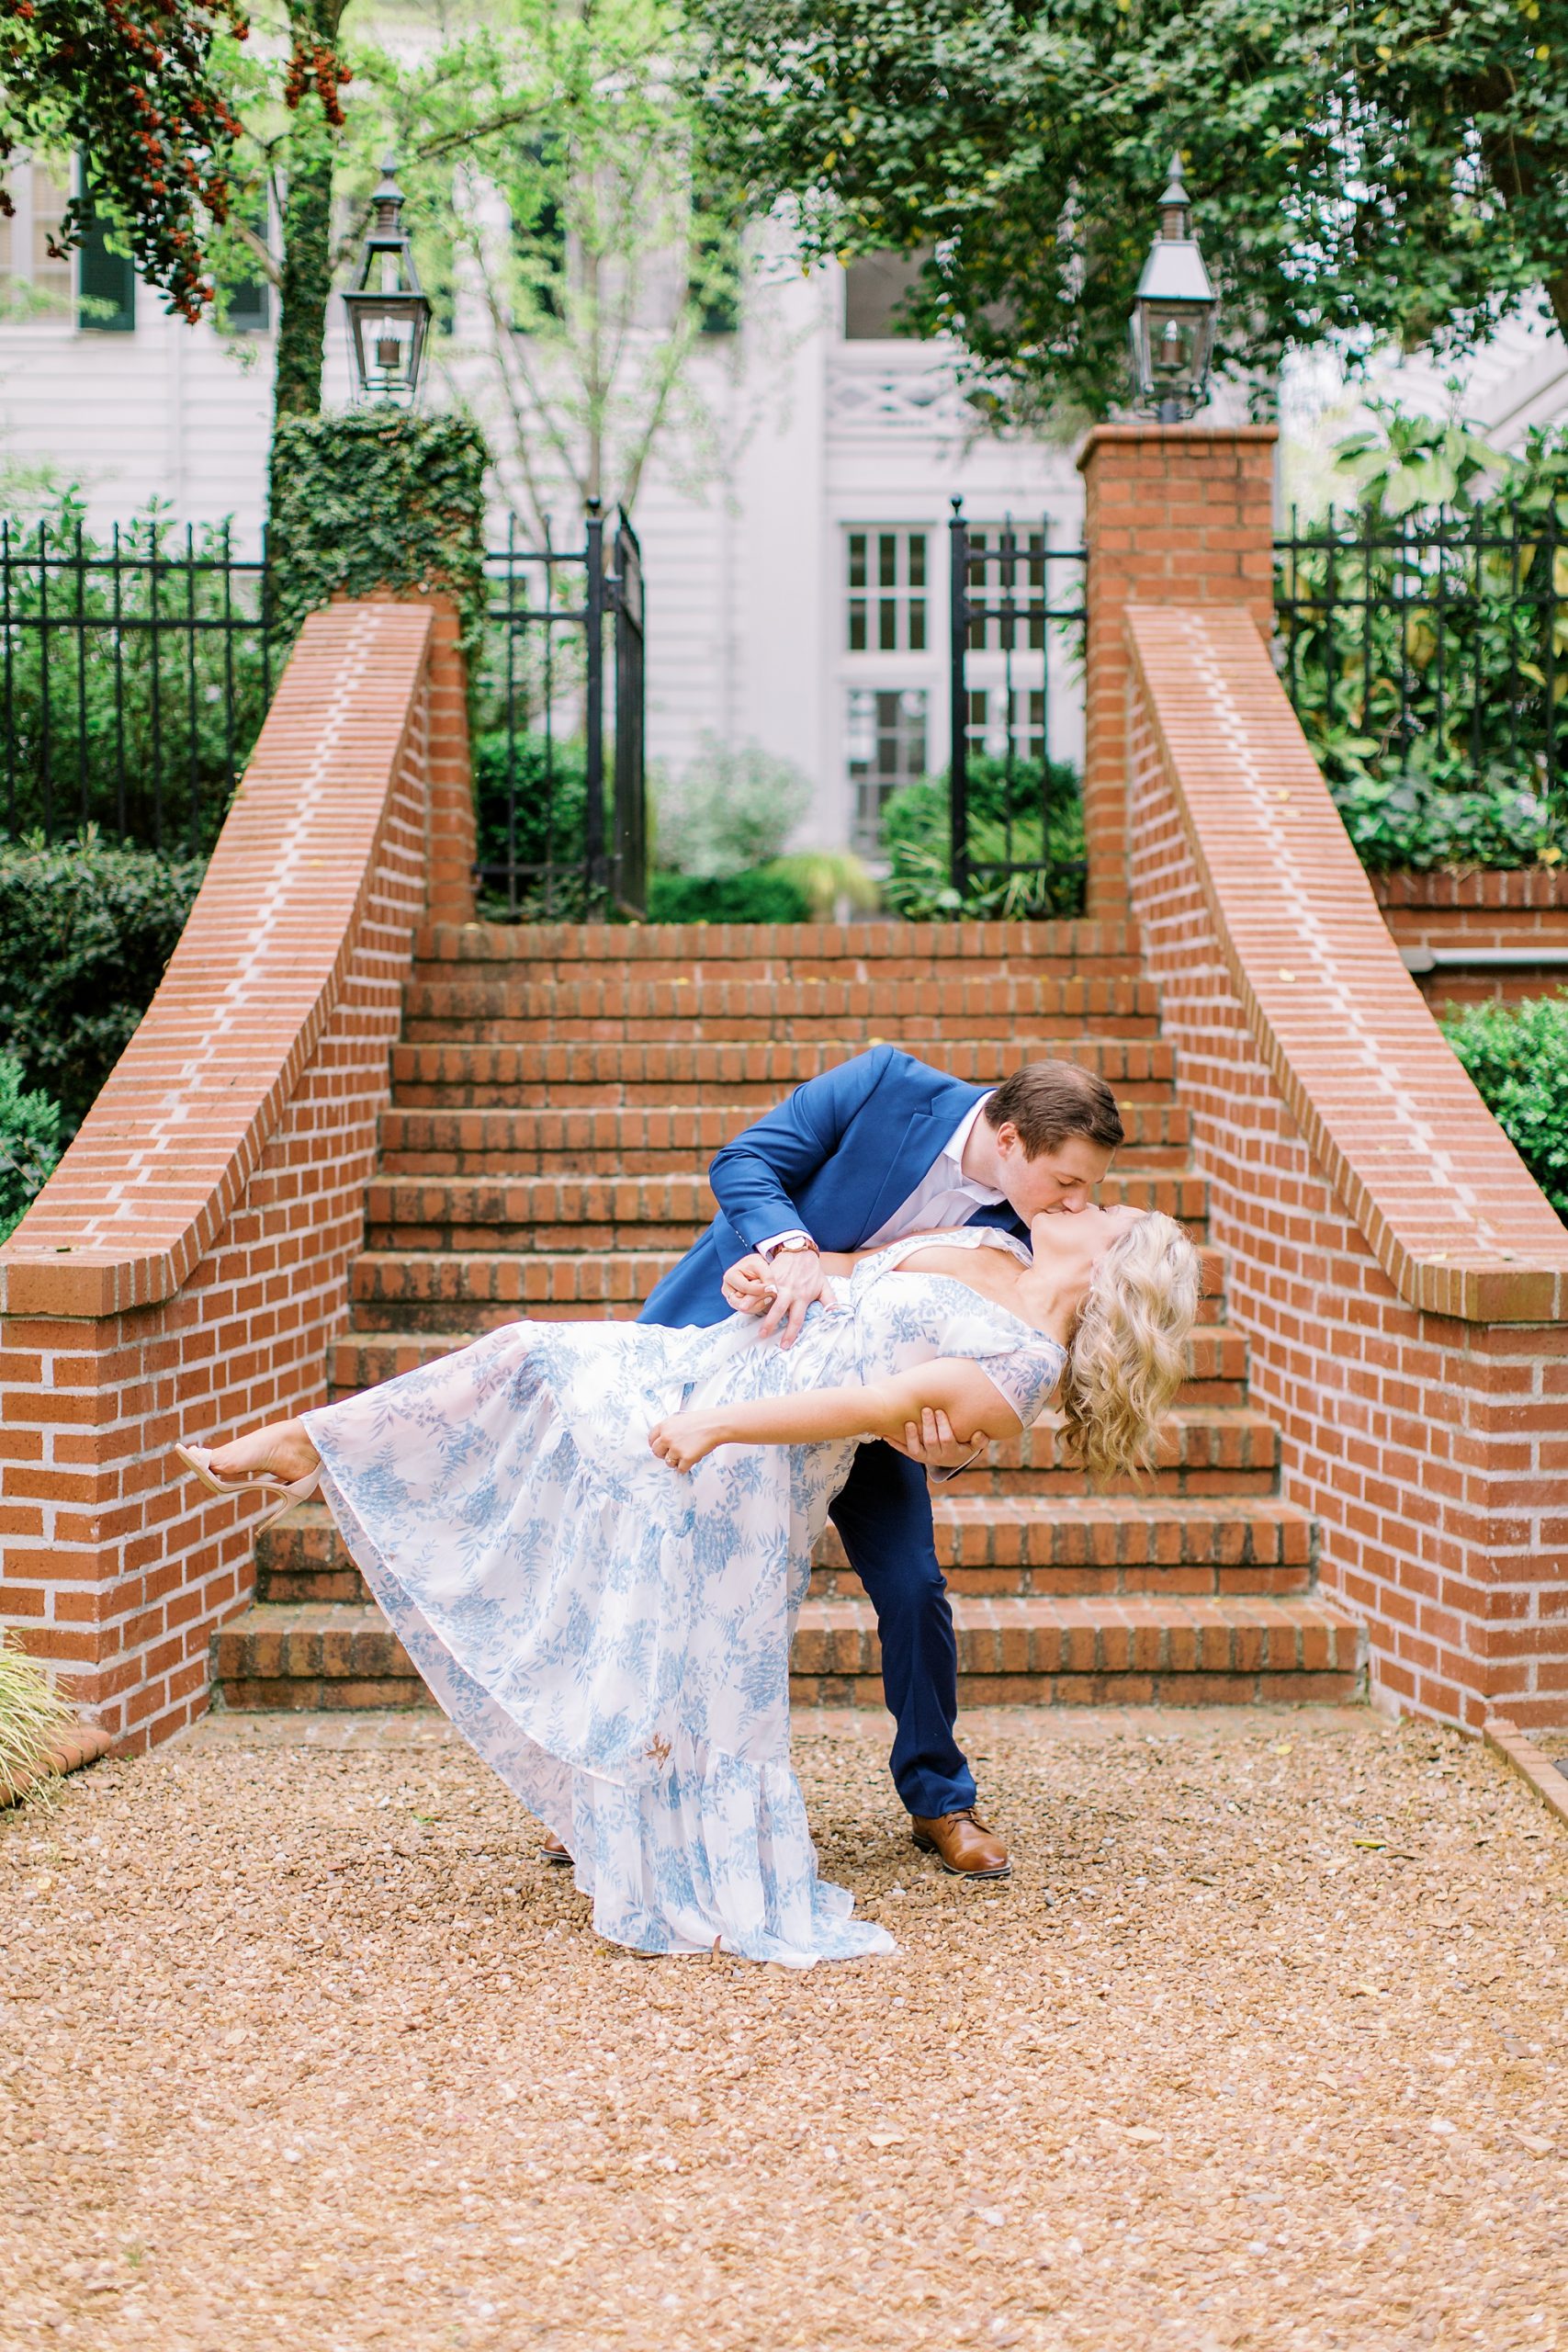 groom kisses bride, dipping her by brick steps